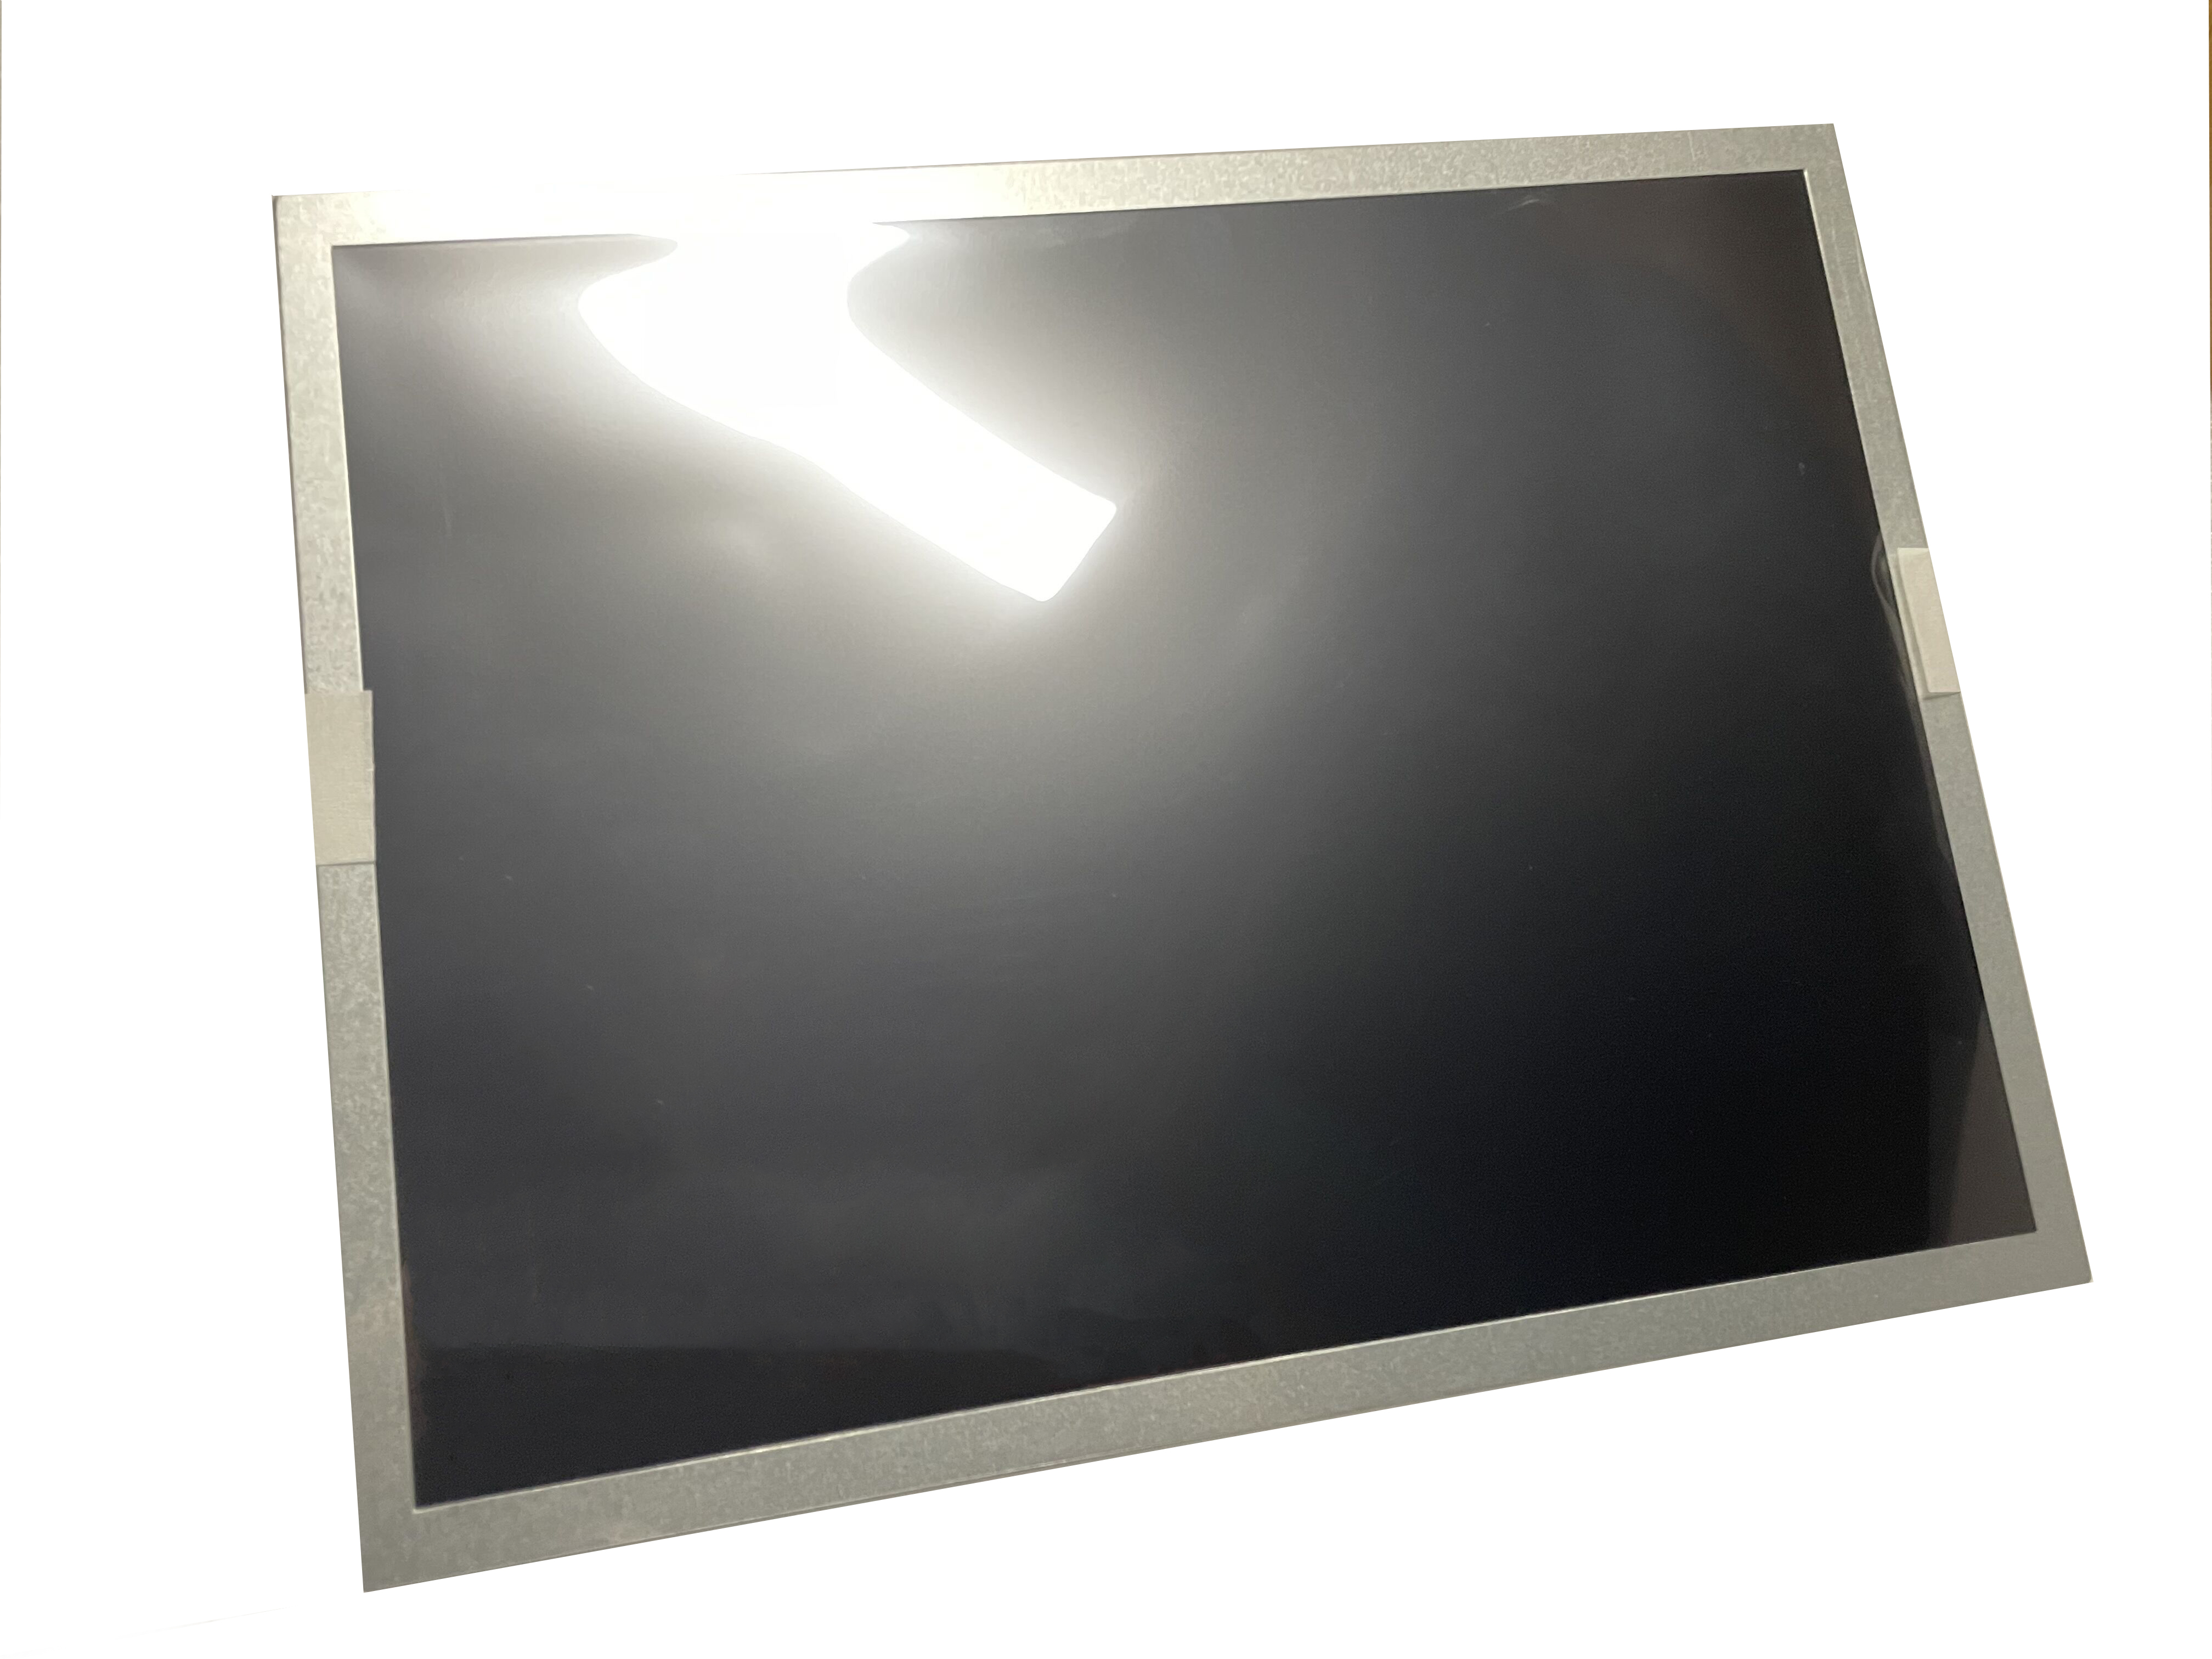 Oryginalny ekran Boe DV150x0M-N16 15 